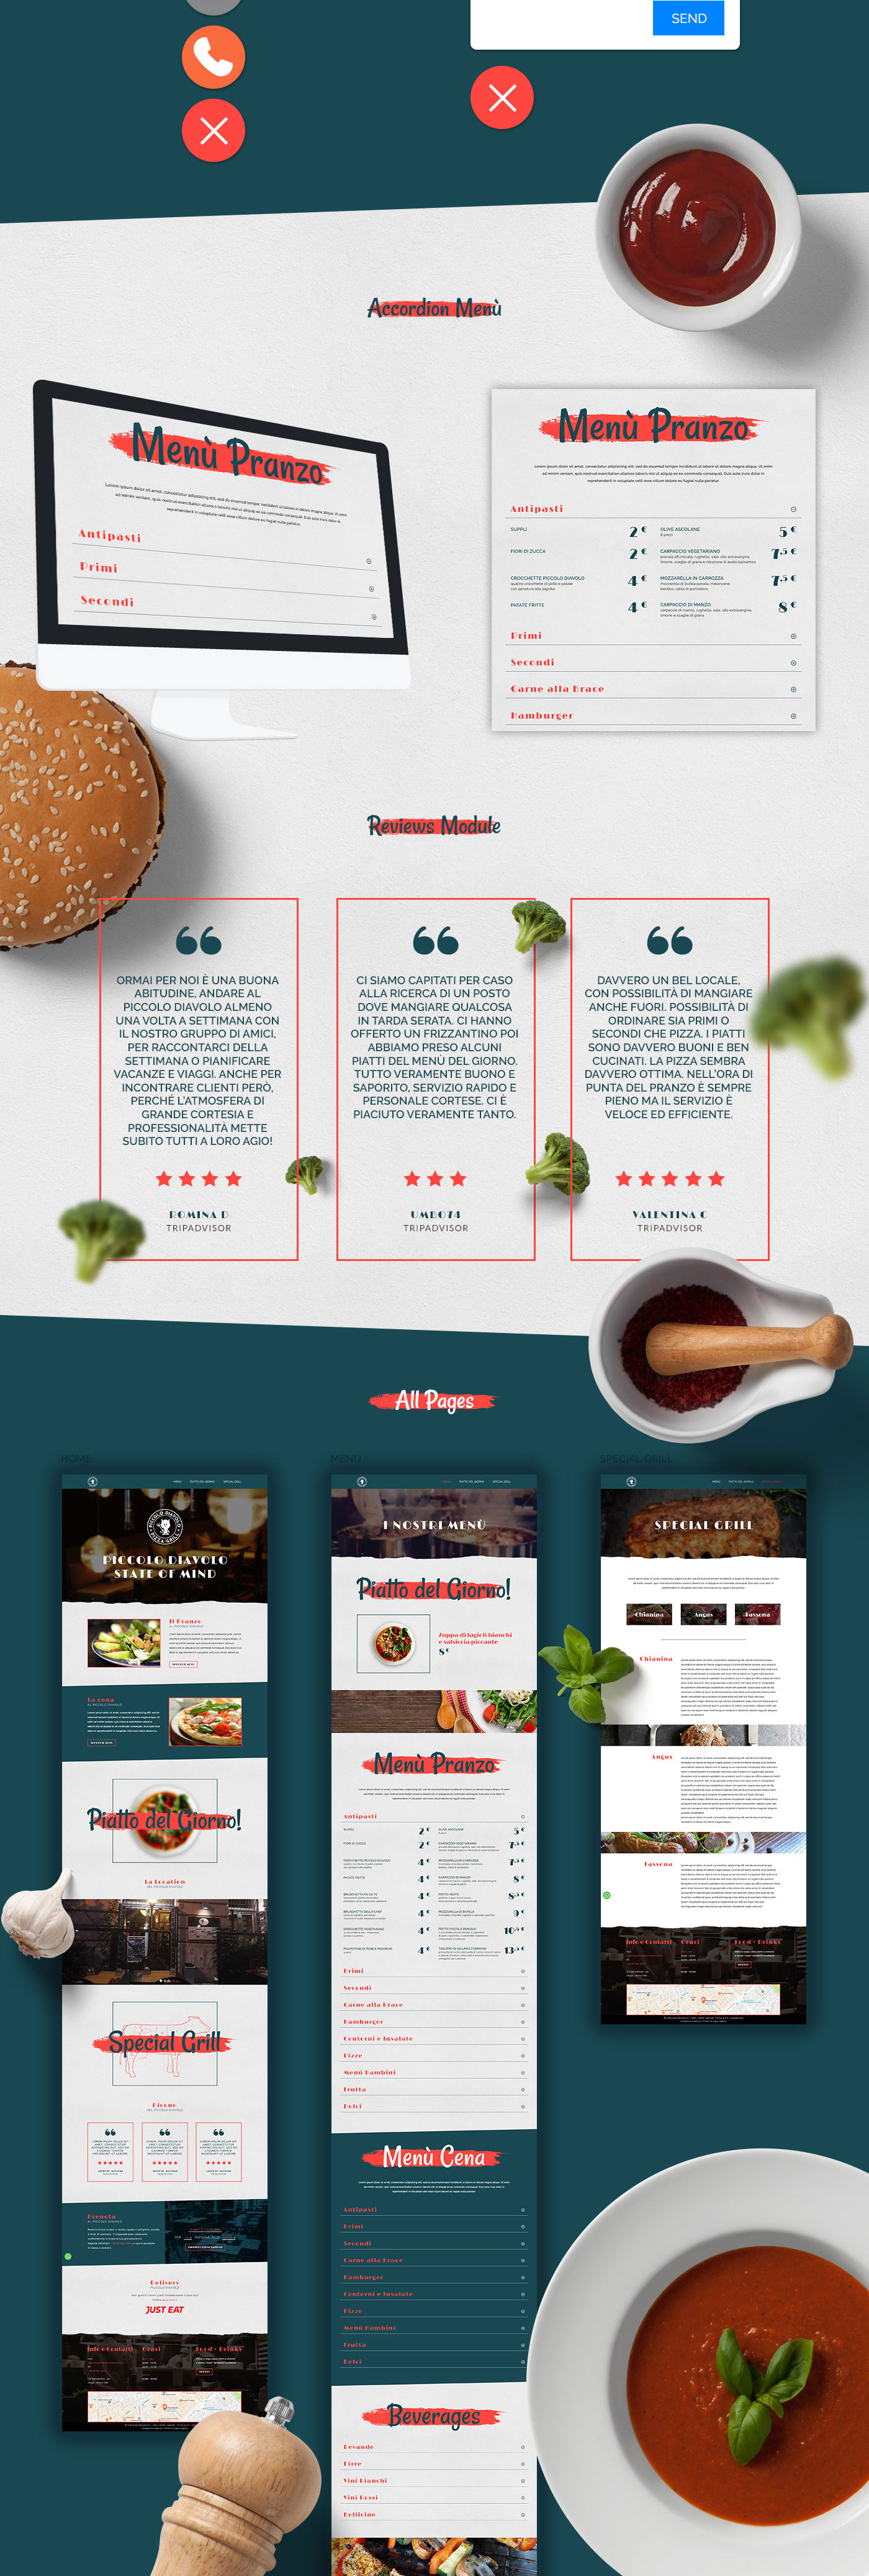 Web Design  design Website blue red css HTML wordpress frontending restaurant